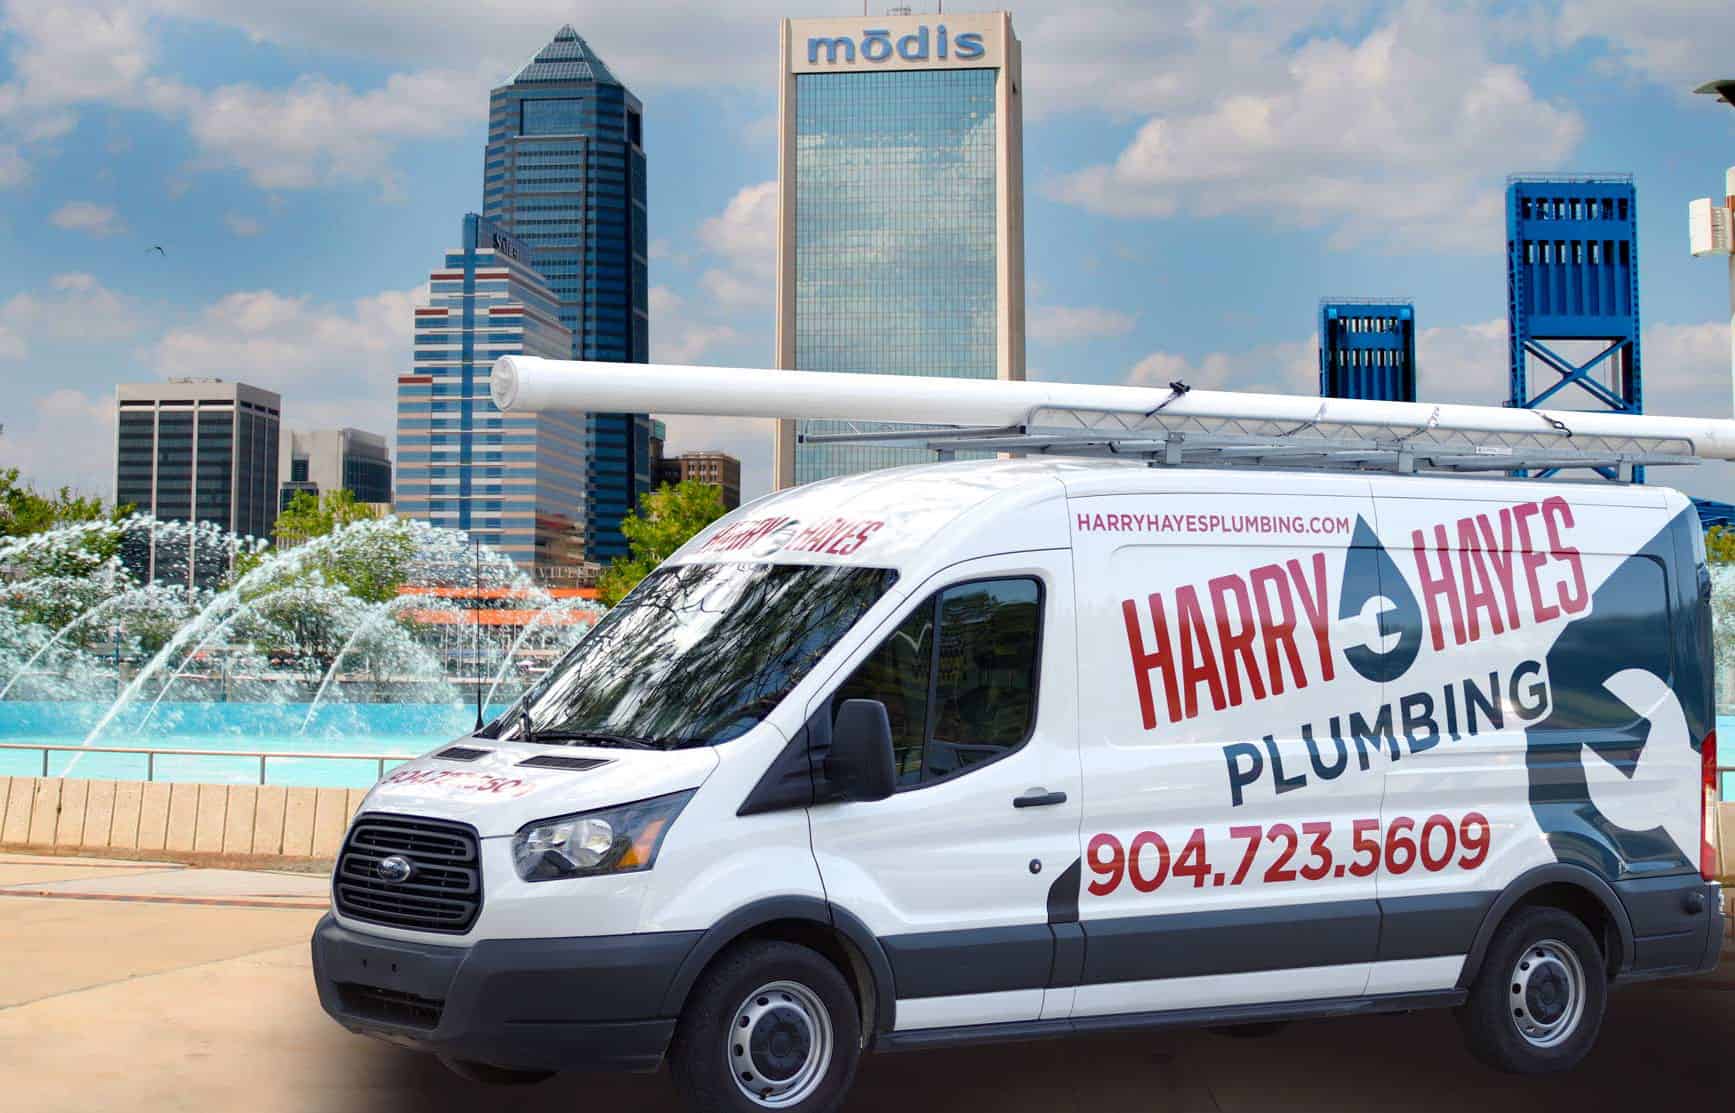 Contact Harry Hayes Plumbing Plumber in Jacksonville, FL